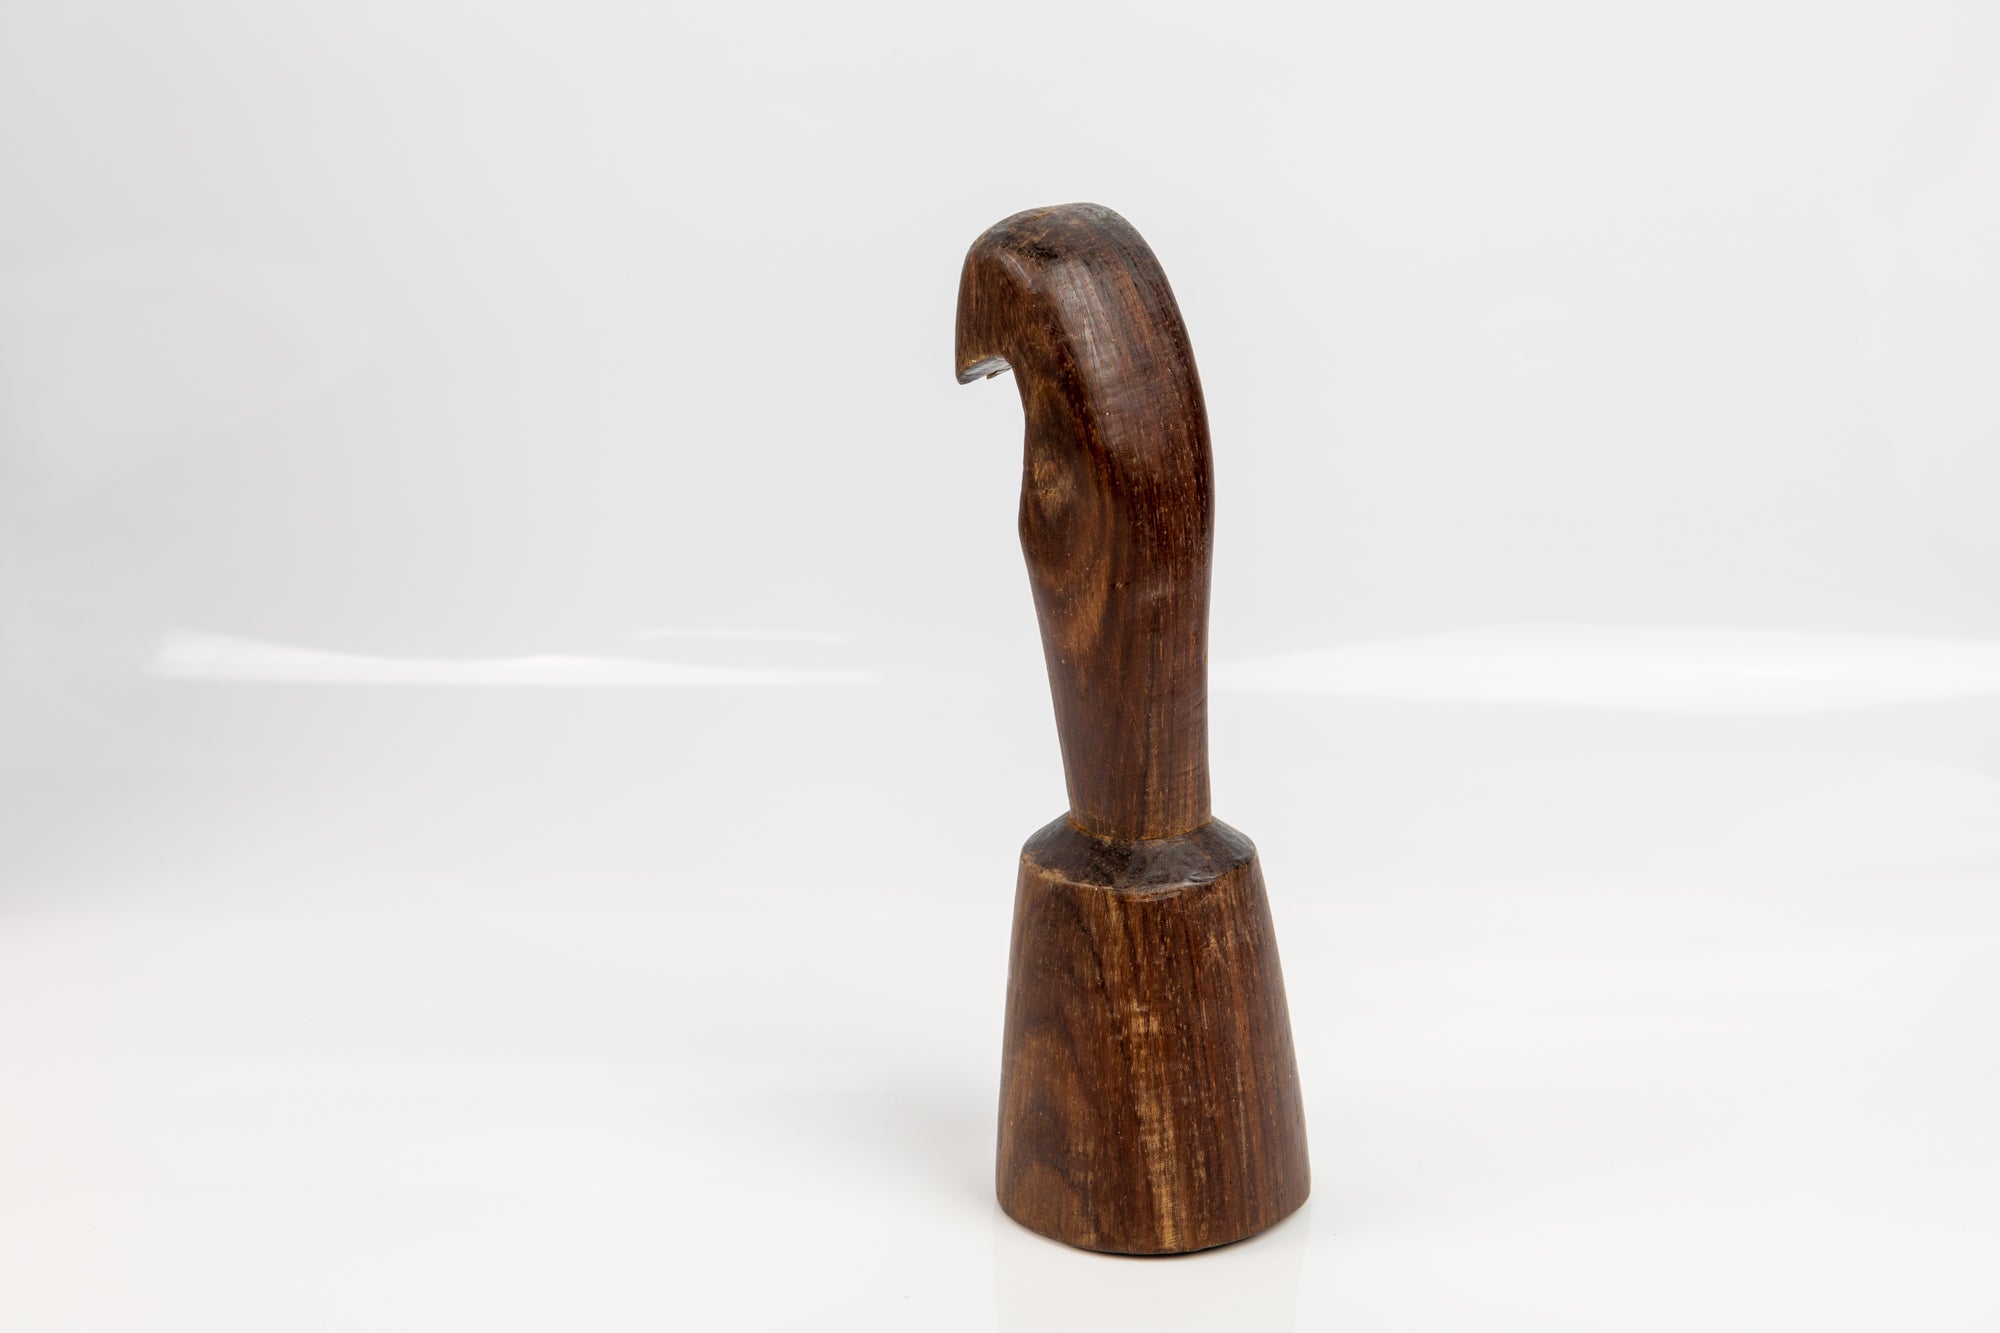 Grain Masher Figurine, Wood Carving